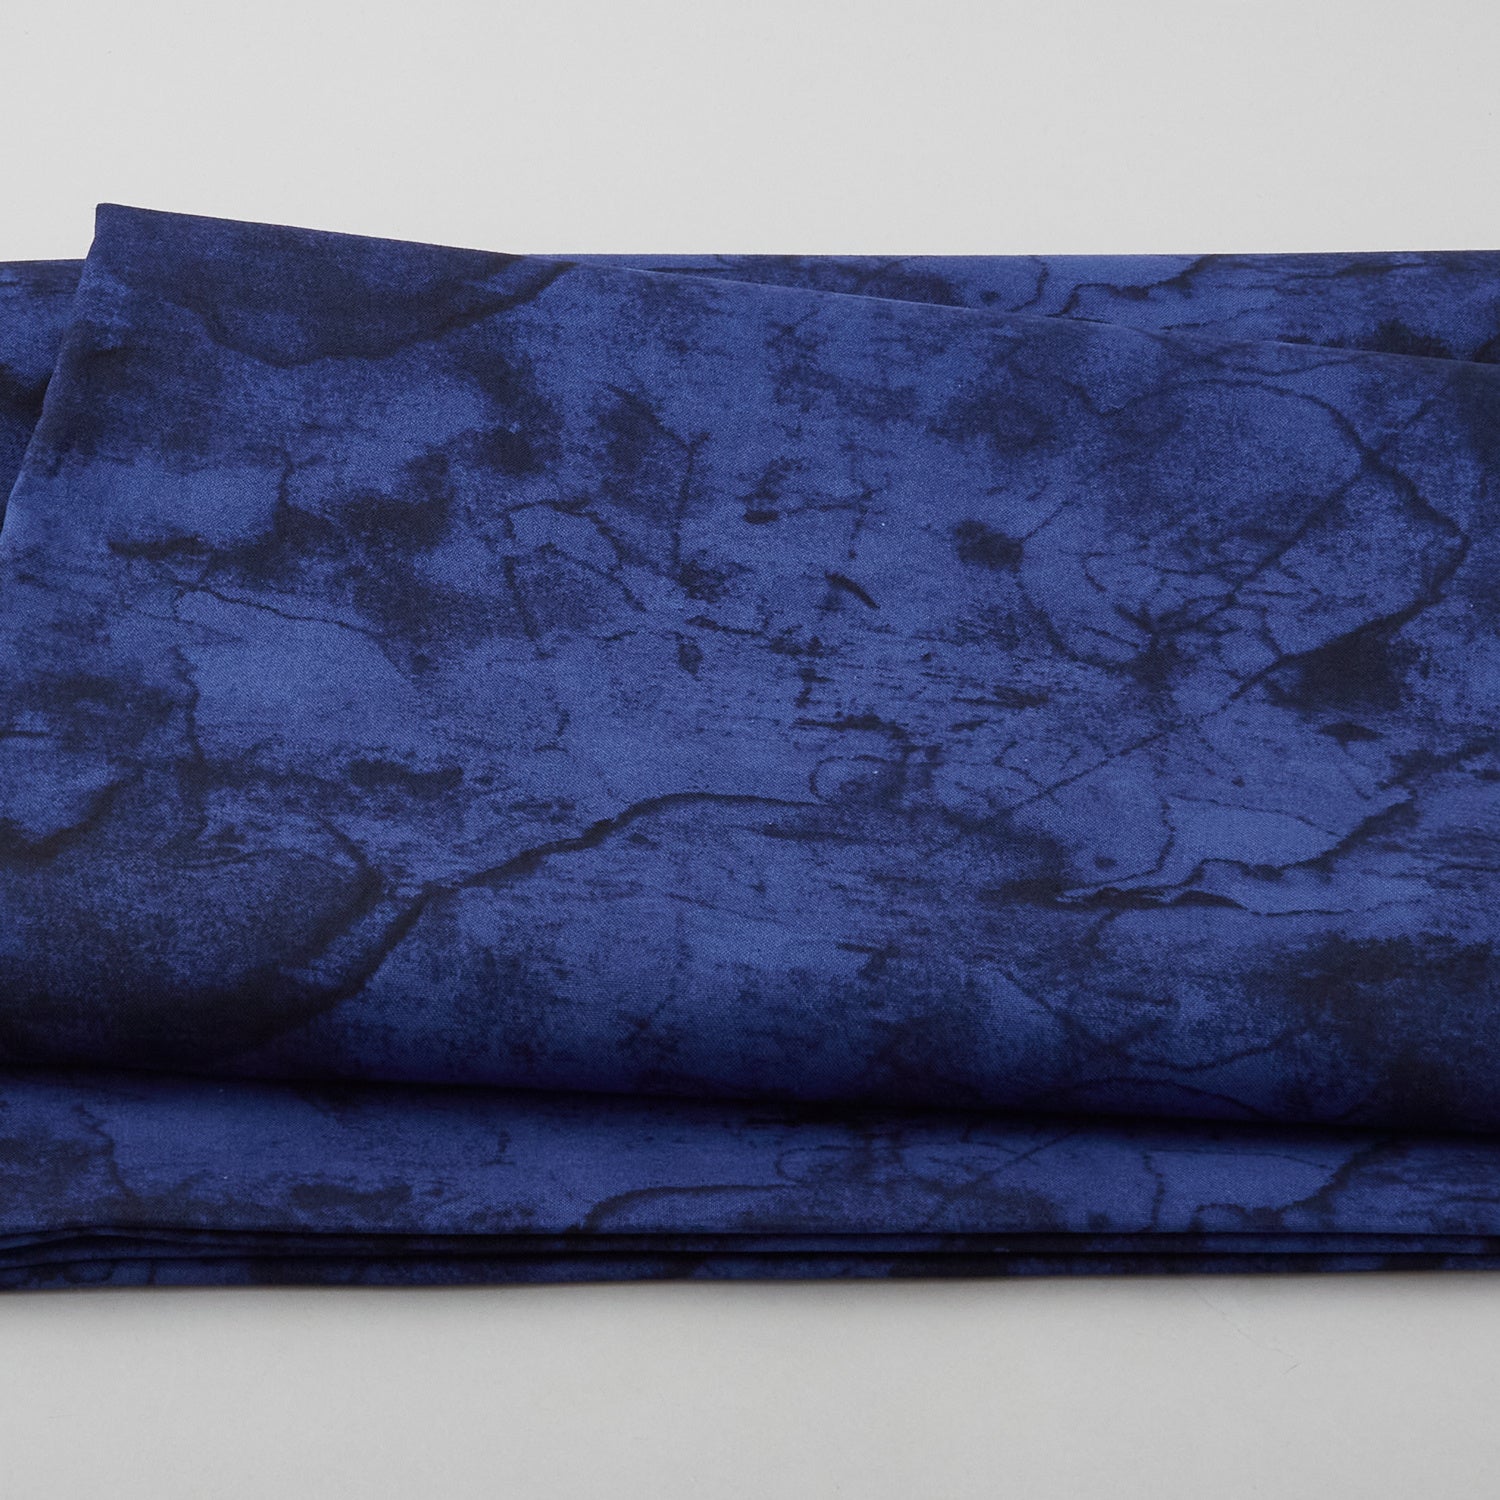 Cotton Quilt Fabric Linen Look Tonal Texture Blenders Royal Blue